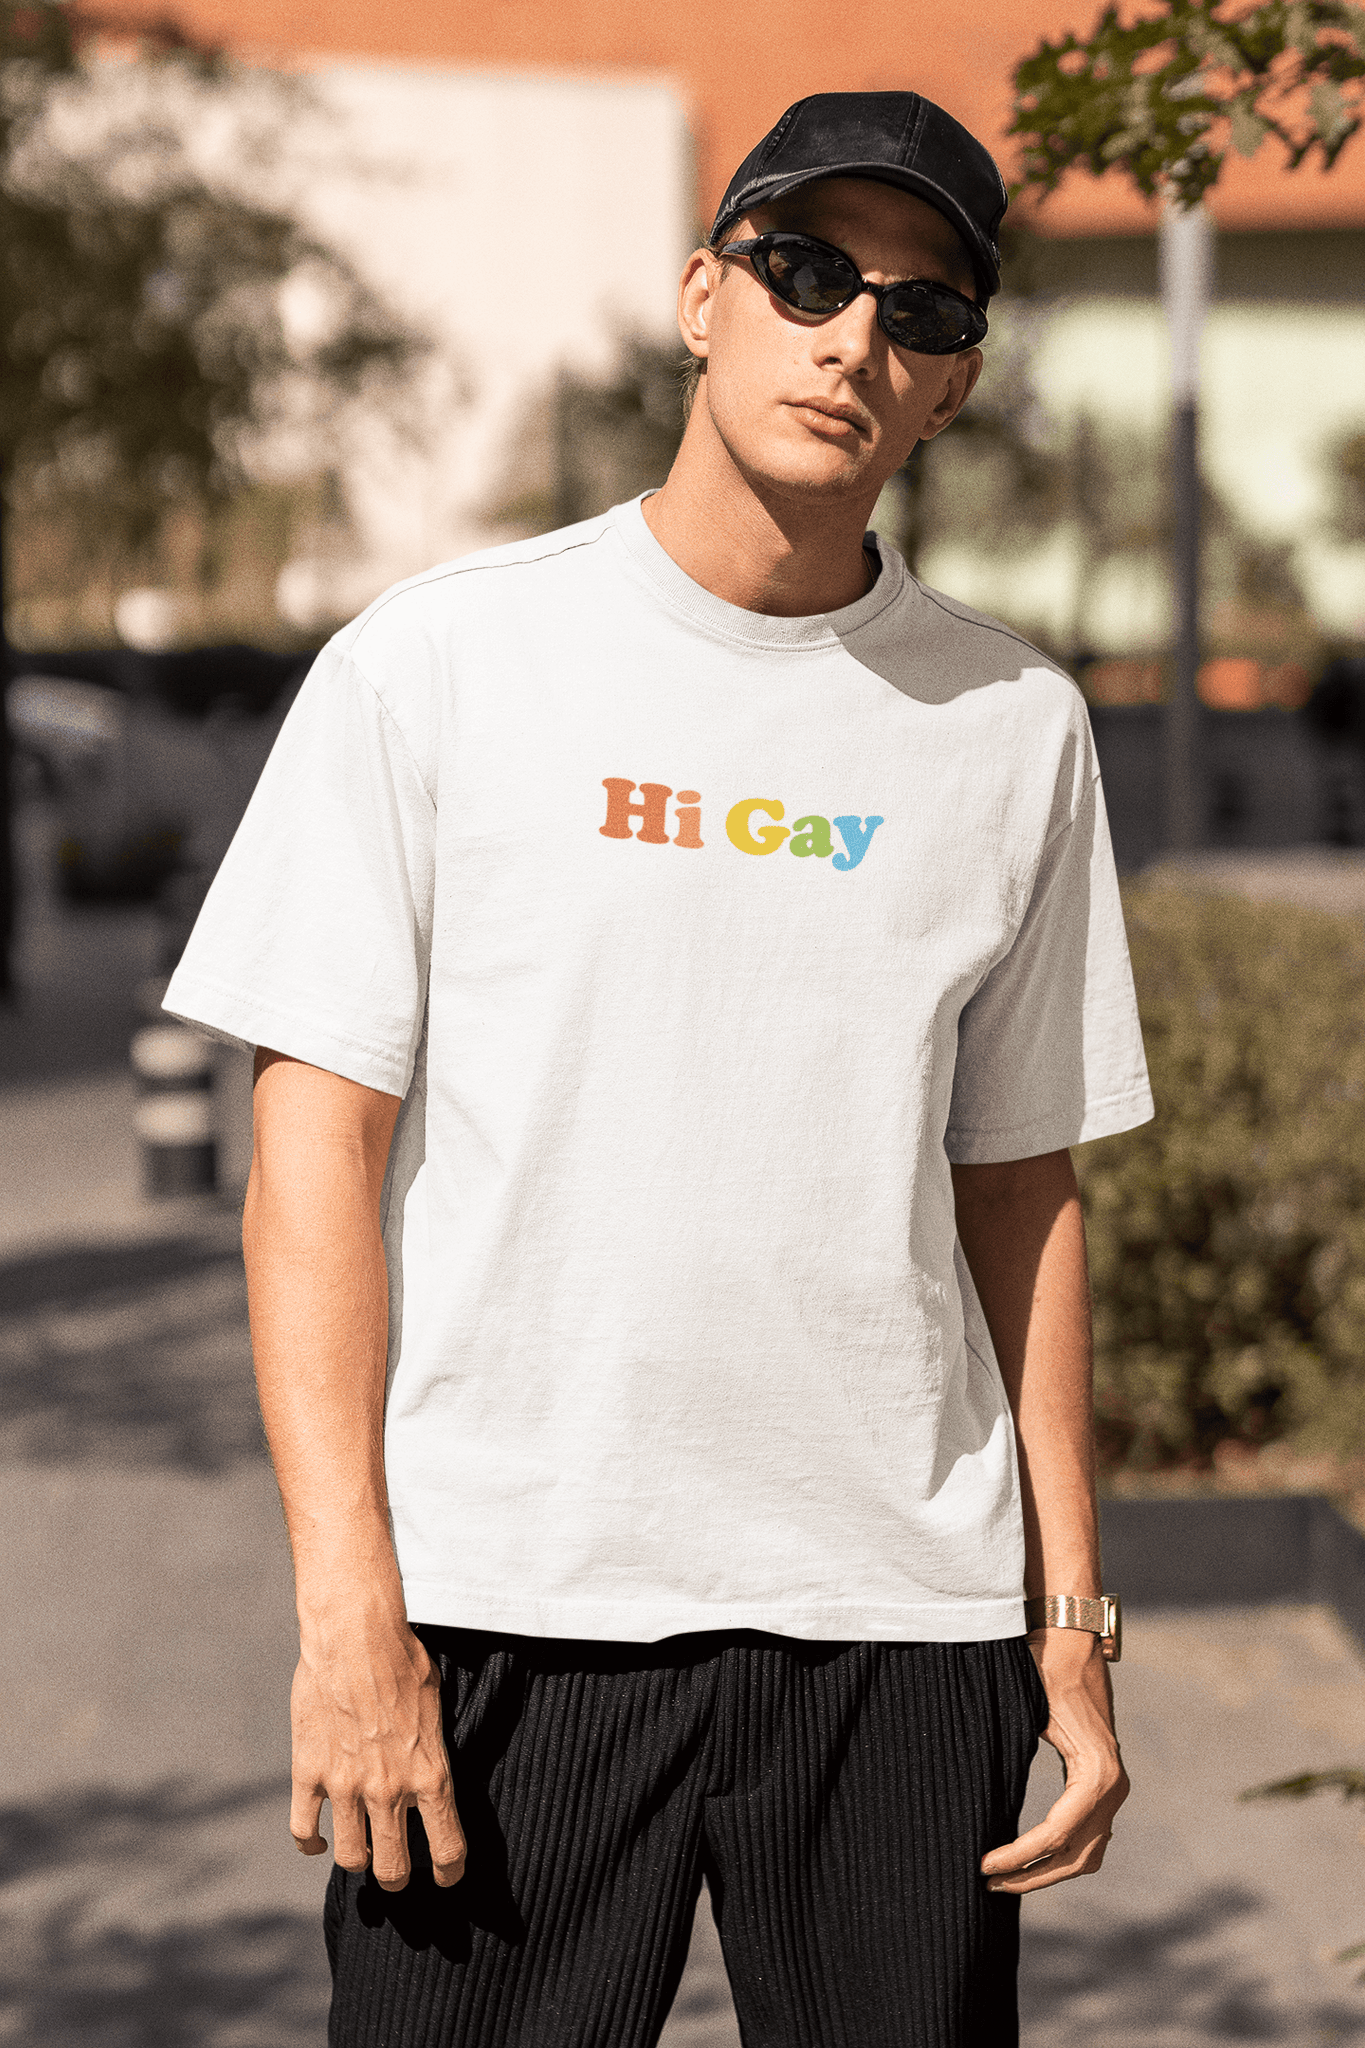 Hi Gay T-Shirt - ShopQueer.co